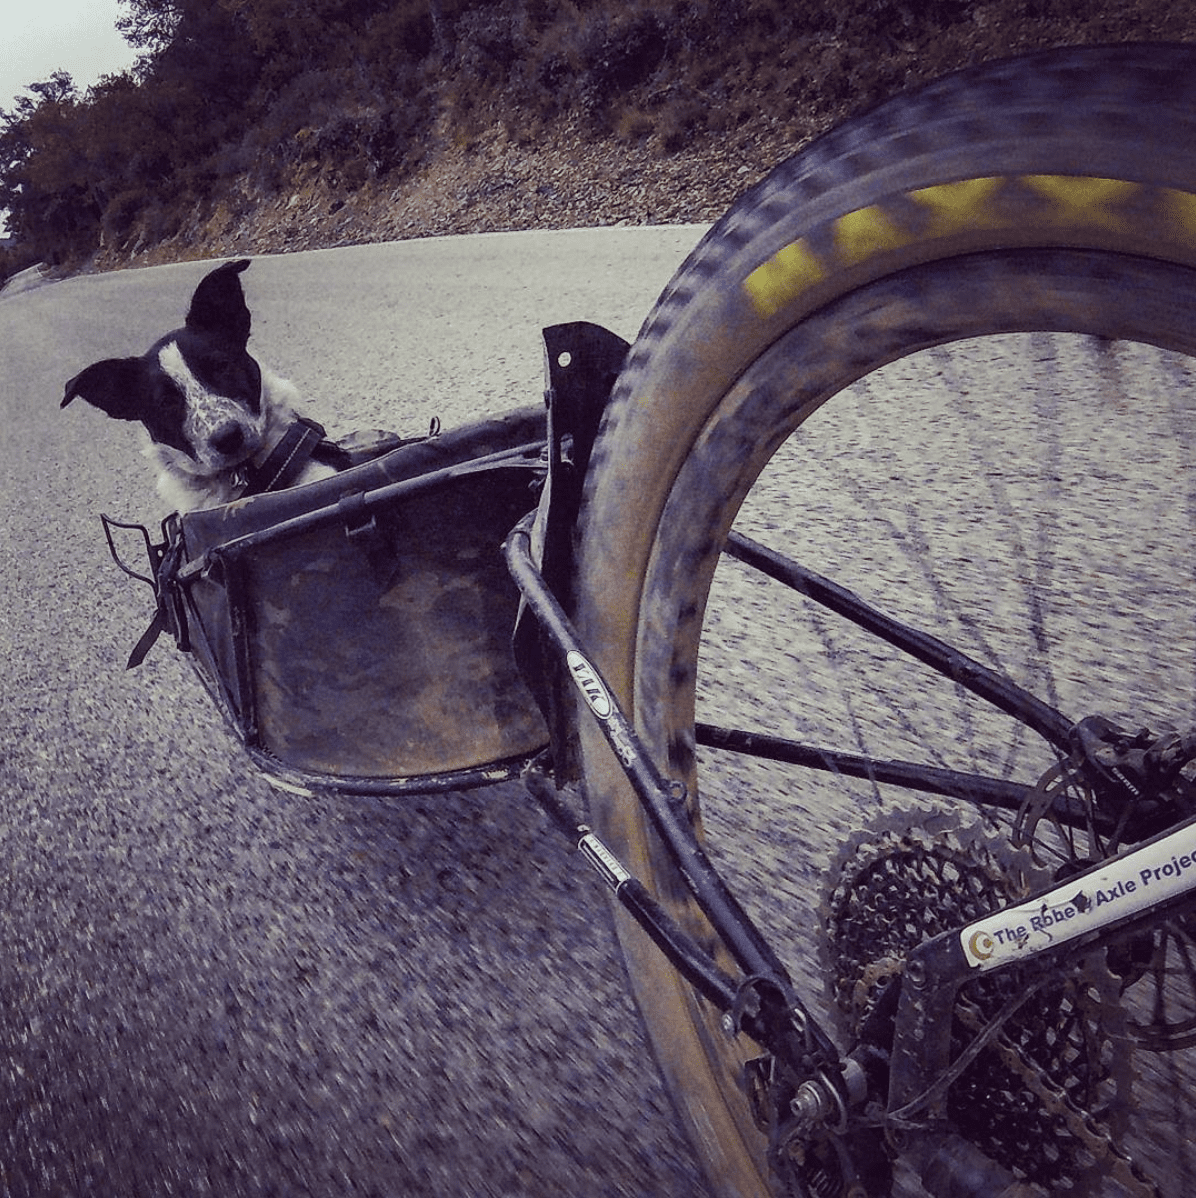 dog riding in trail behind wheel of bike